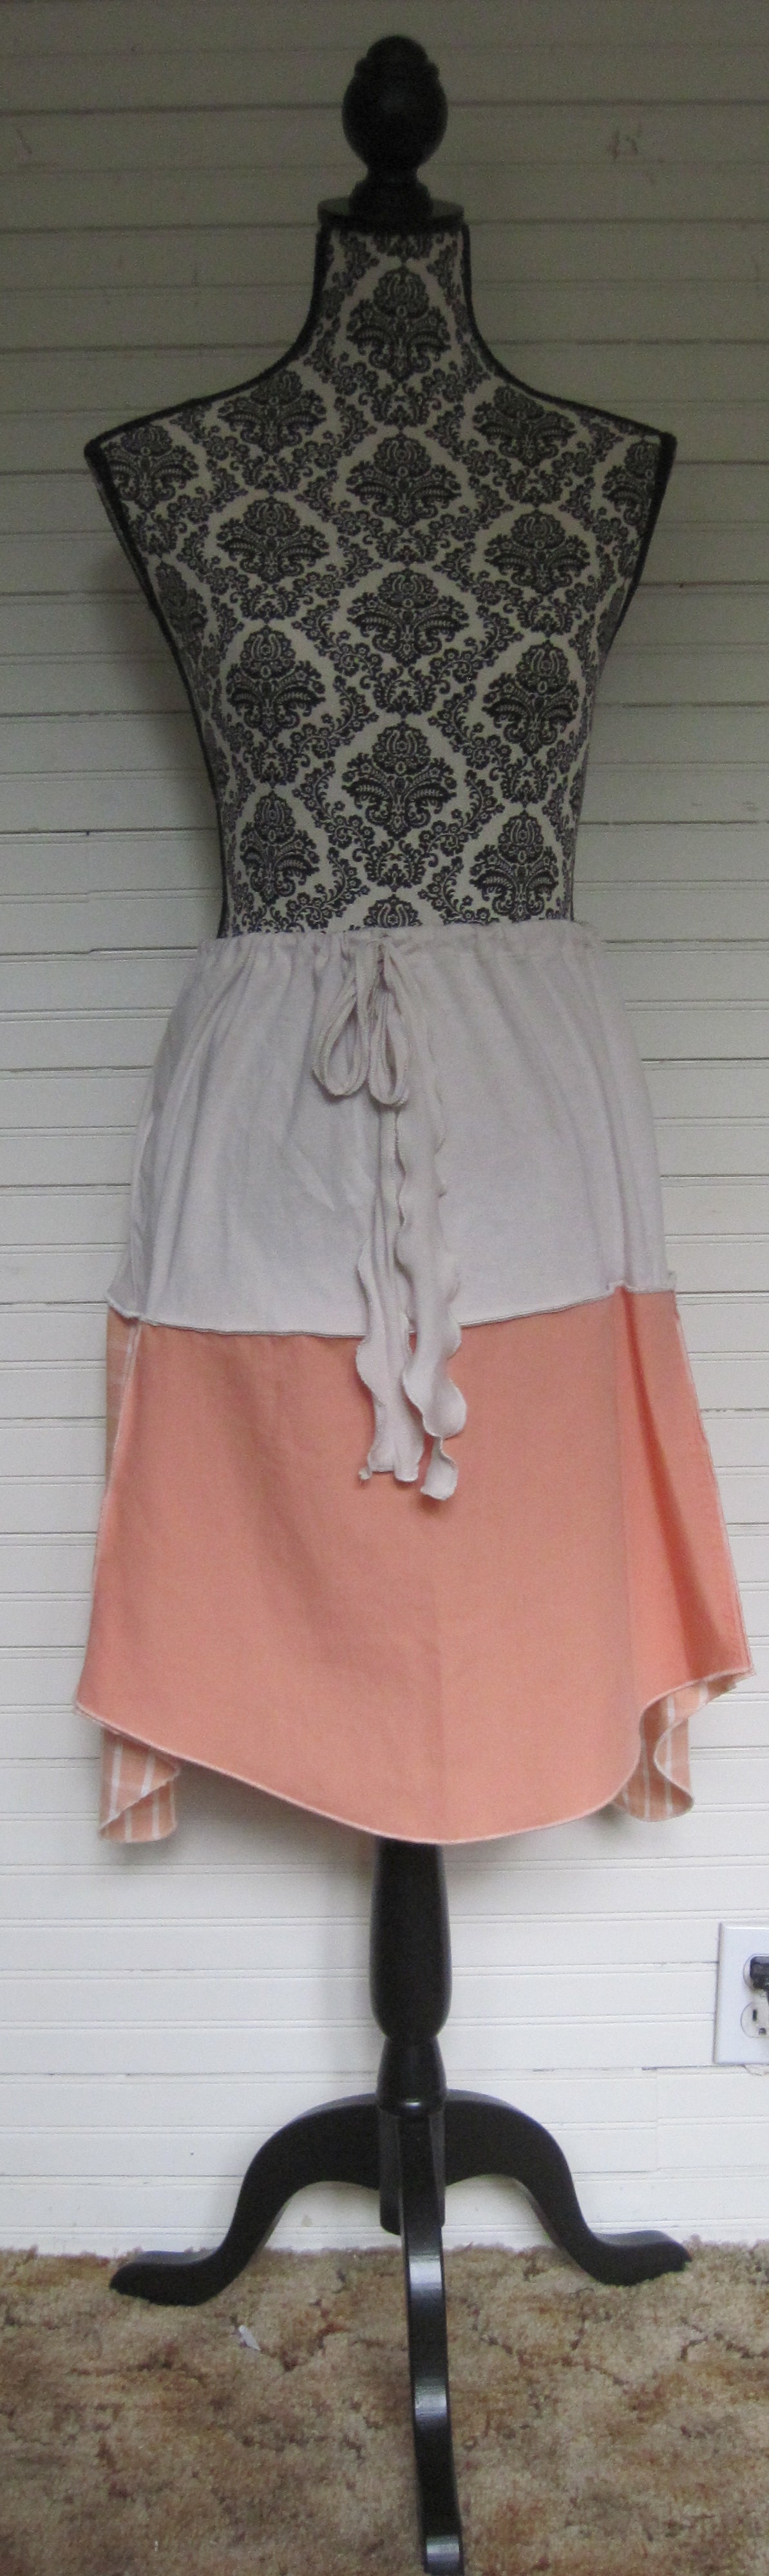 Upcycled Skirt